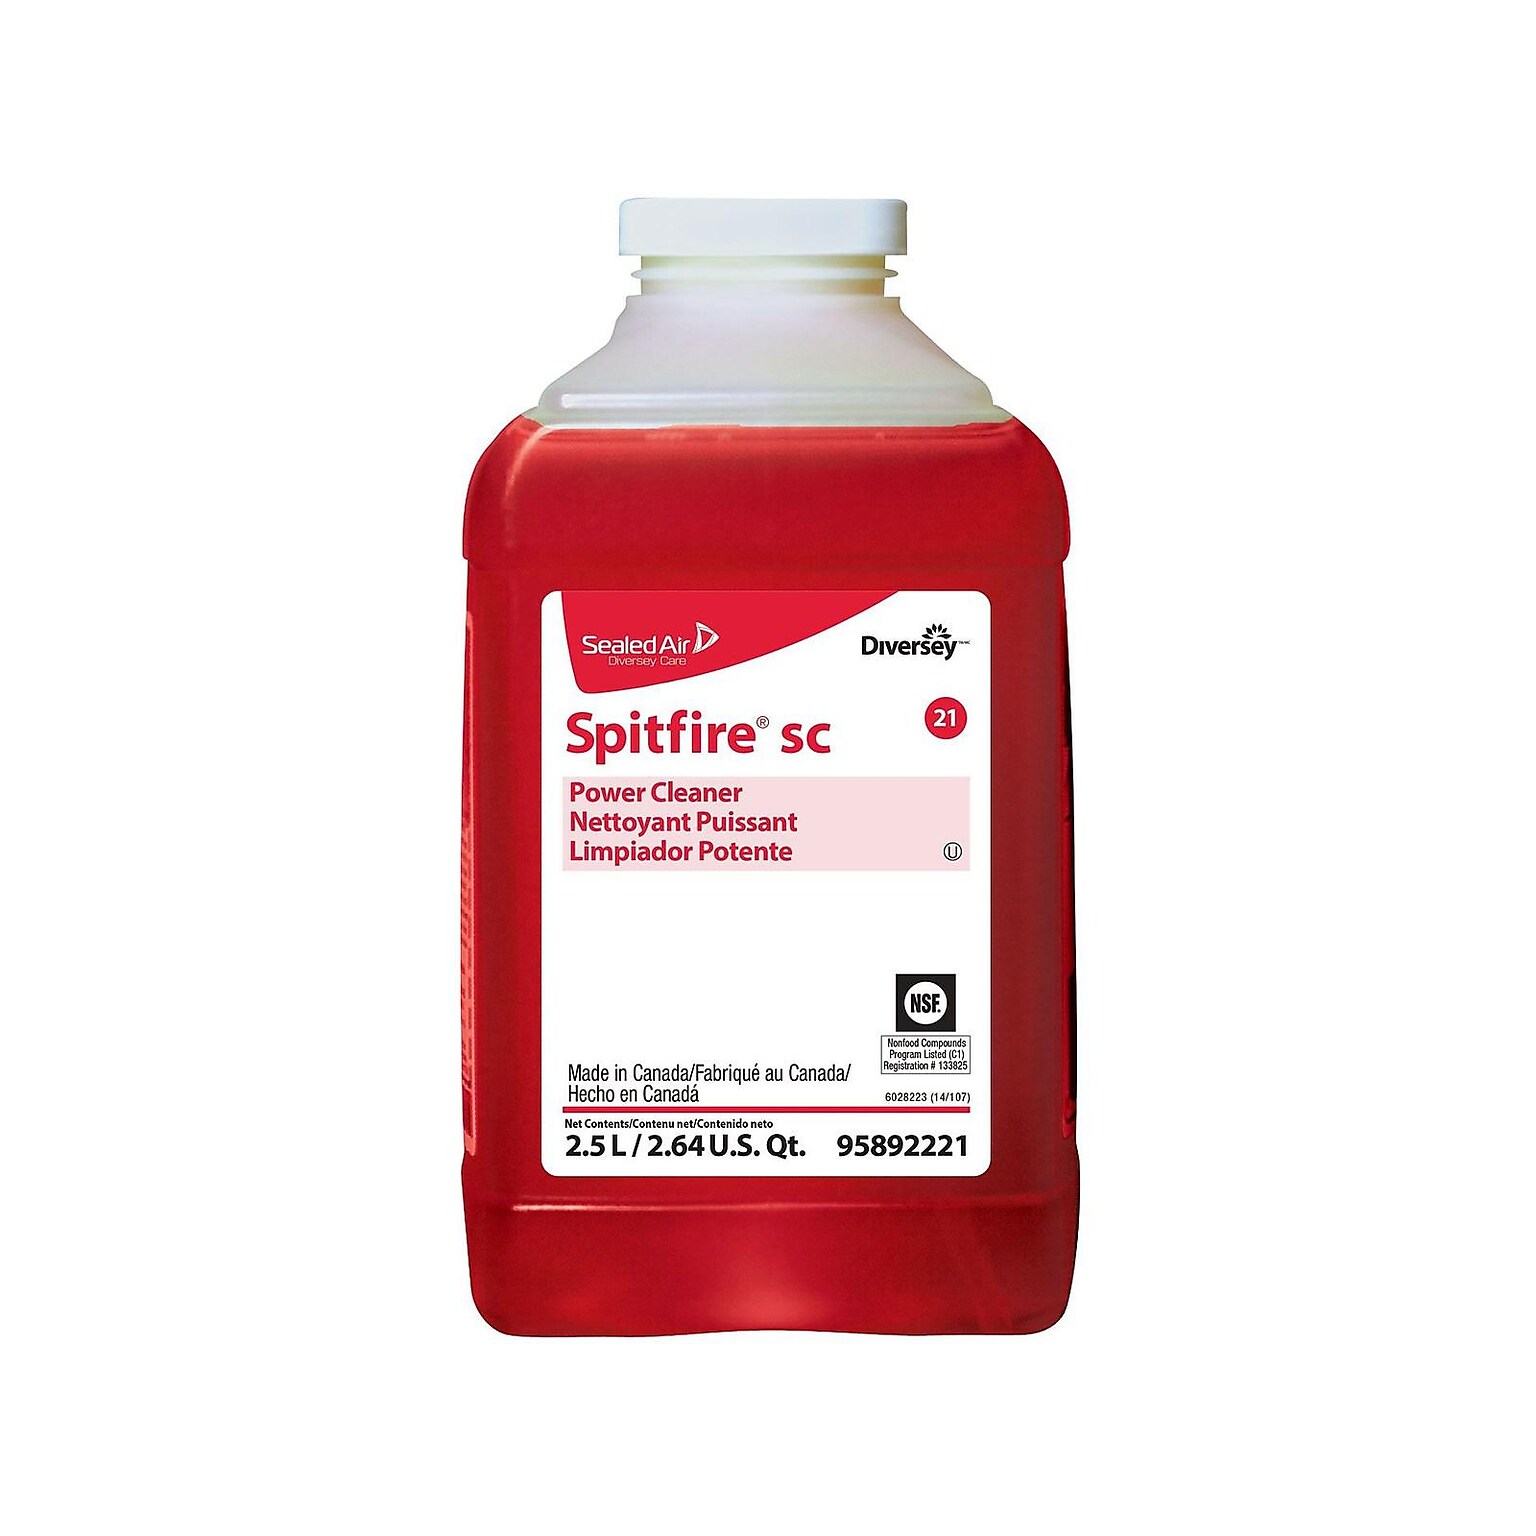 Spitfire SC Multipurpose Cleaner for Diversey J-Fill, Pine, 2.5 L / 2.64 U.S. Qt., 2/Carton